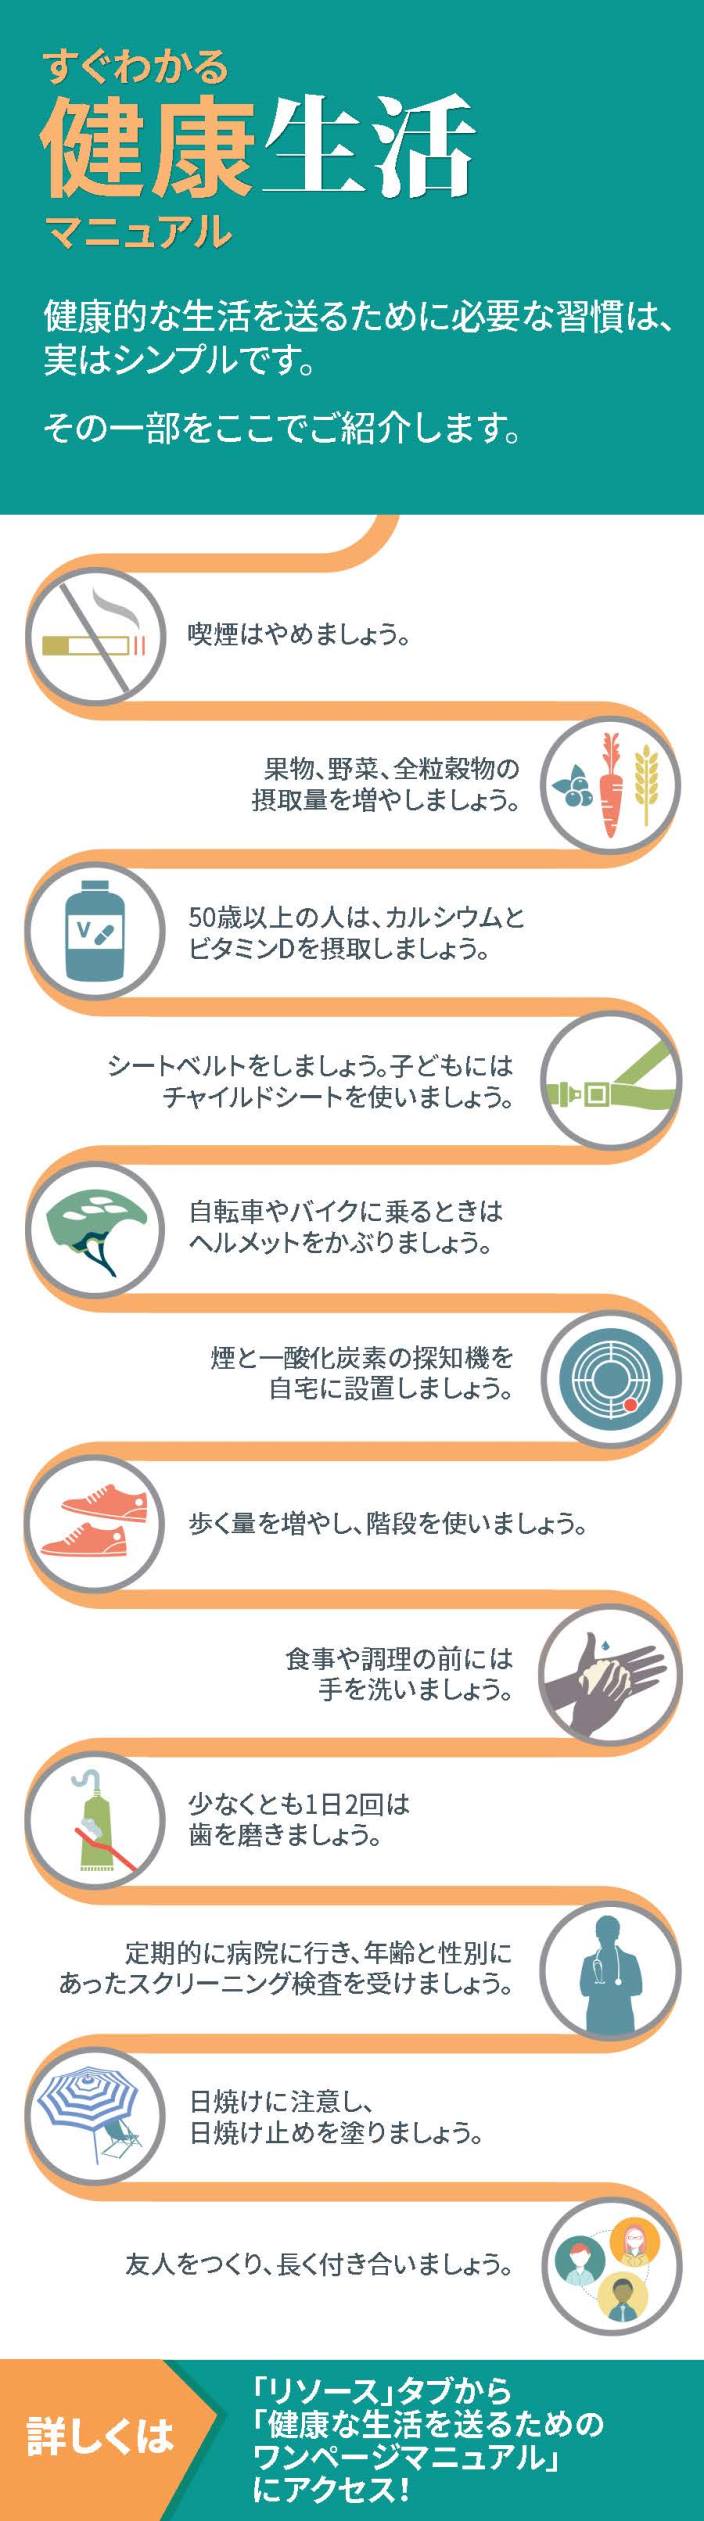 Infographic Ja Feb19 Msdマニュアル家庭版